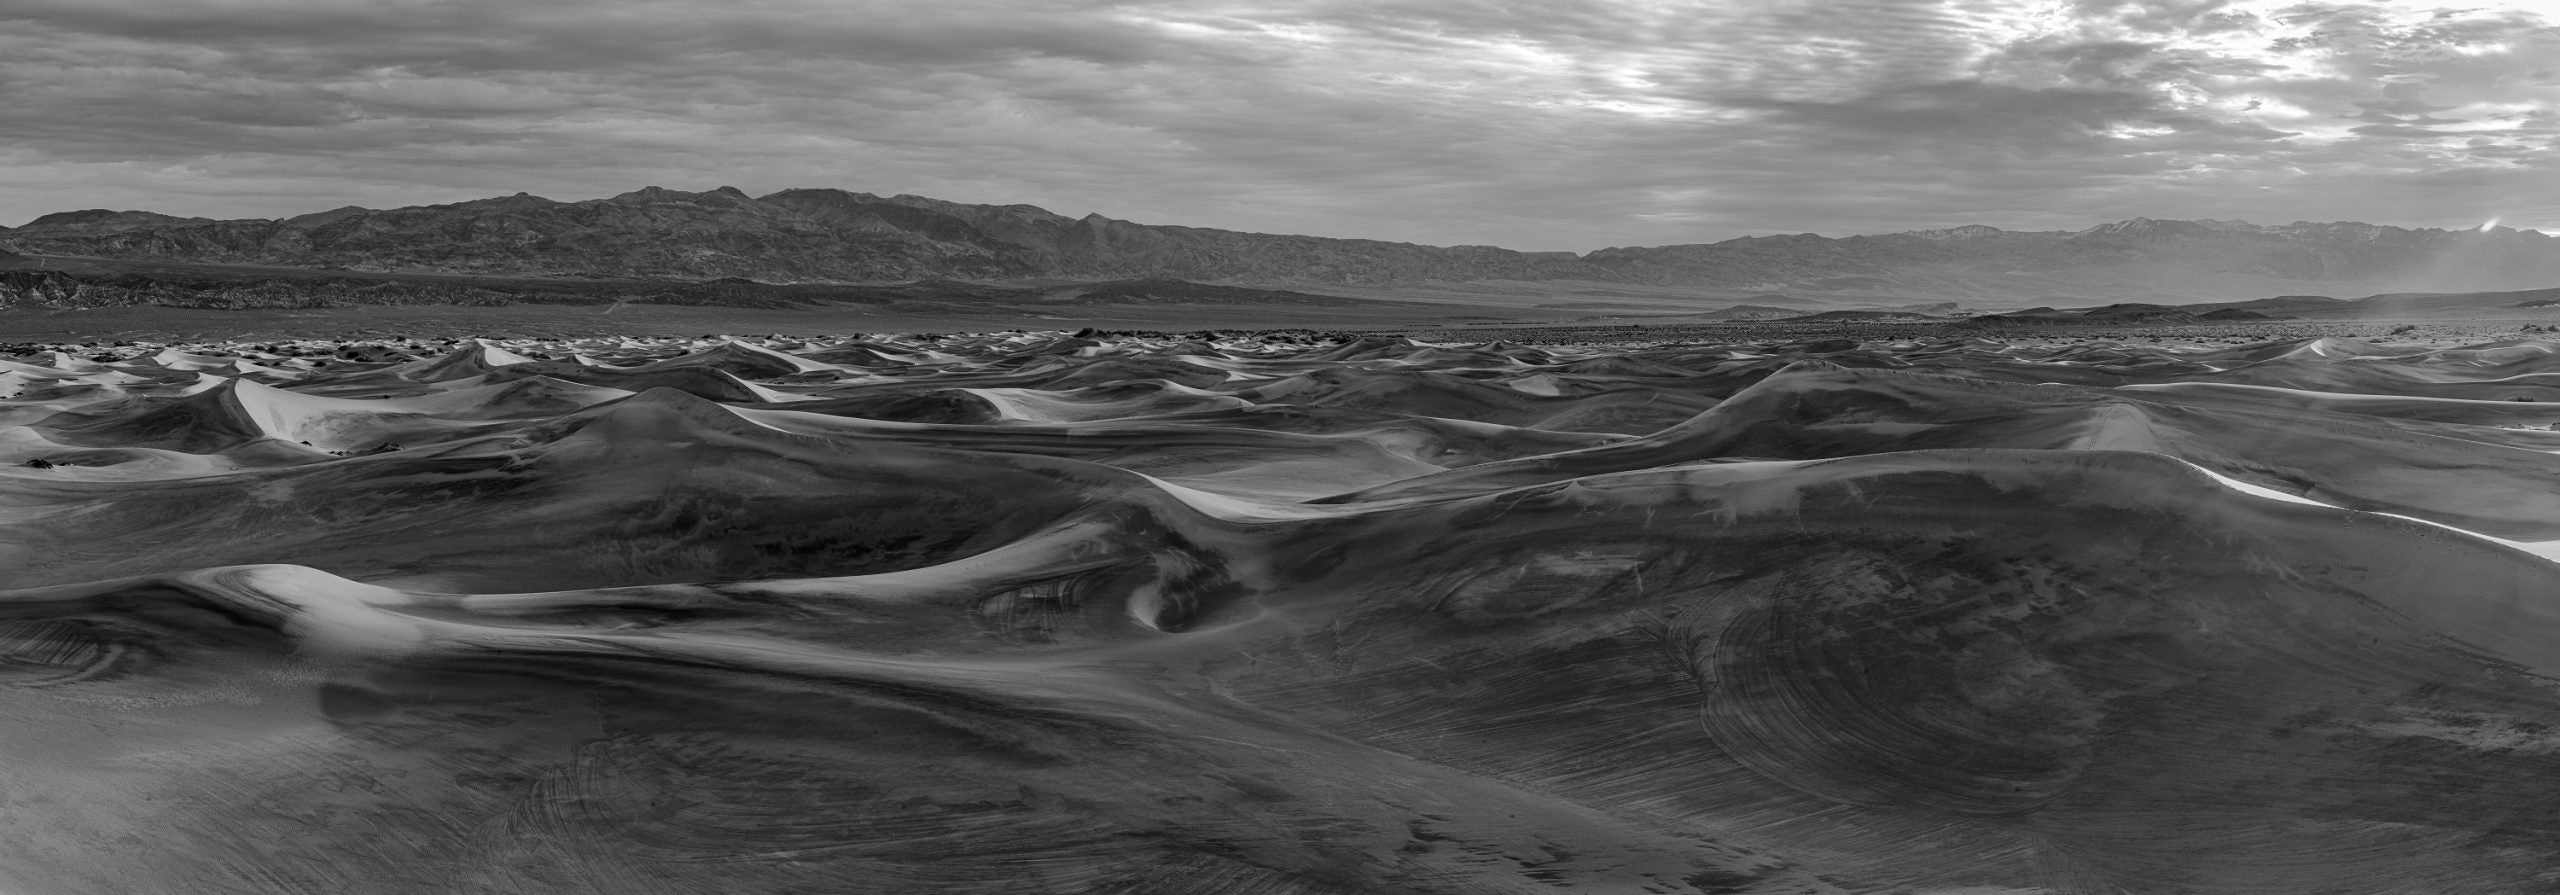 black and white photo award sand dune